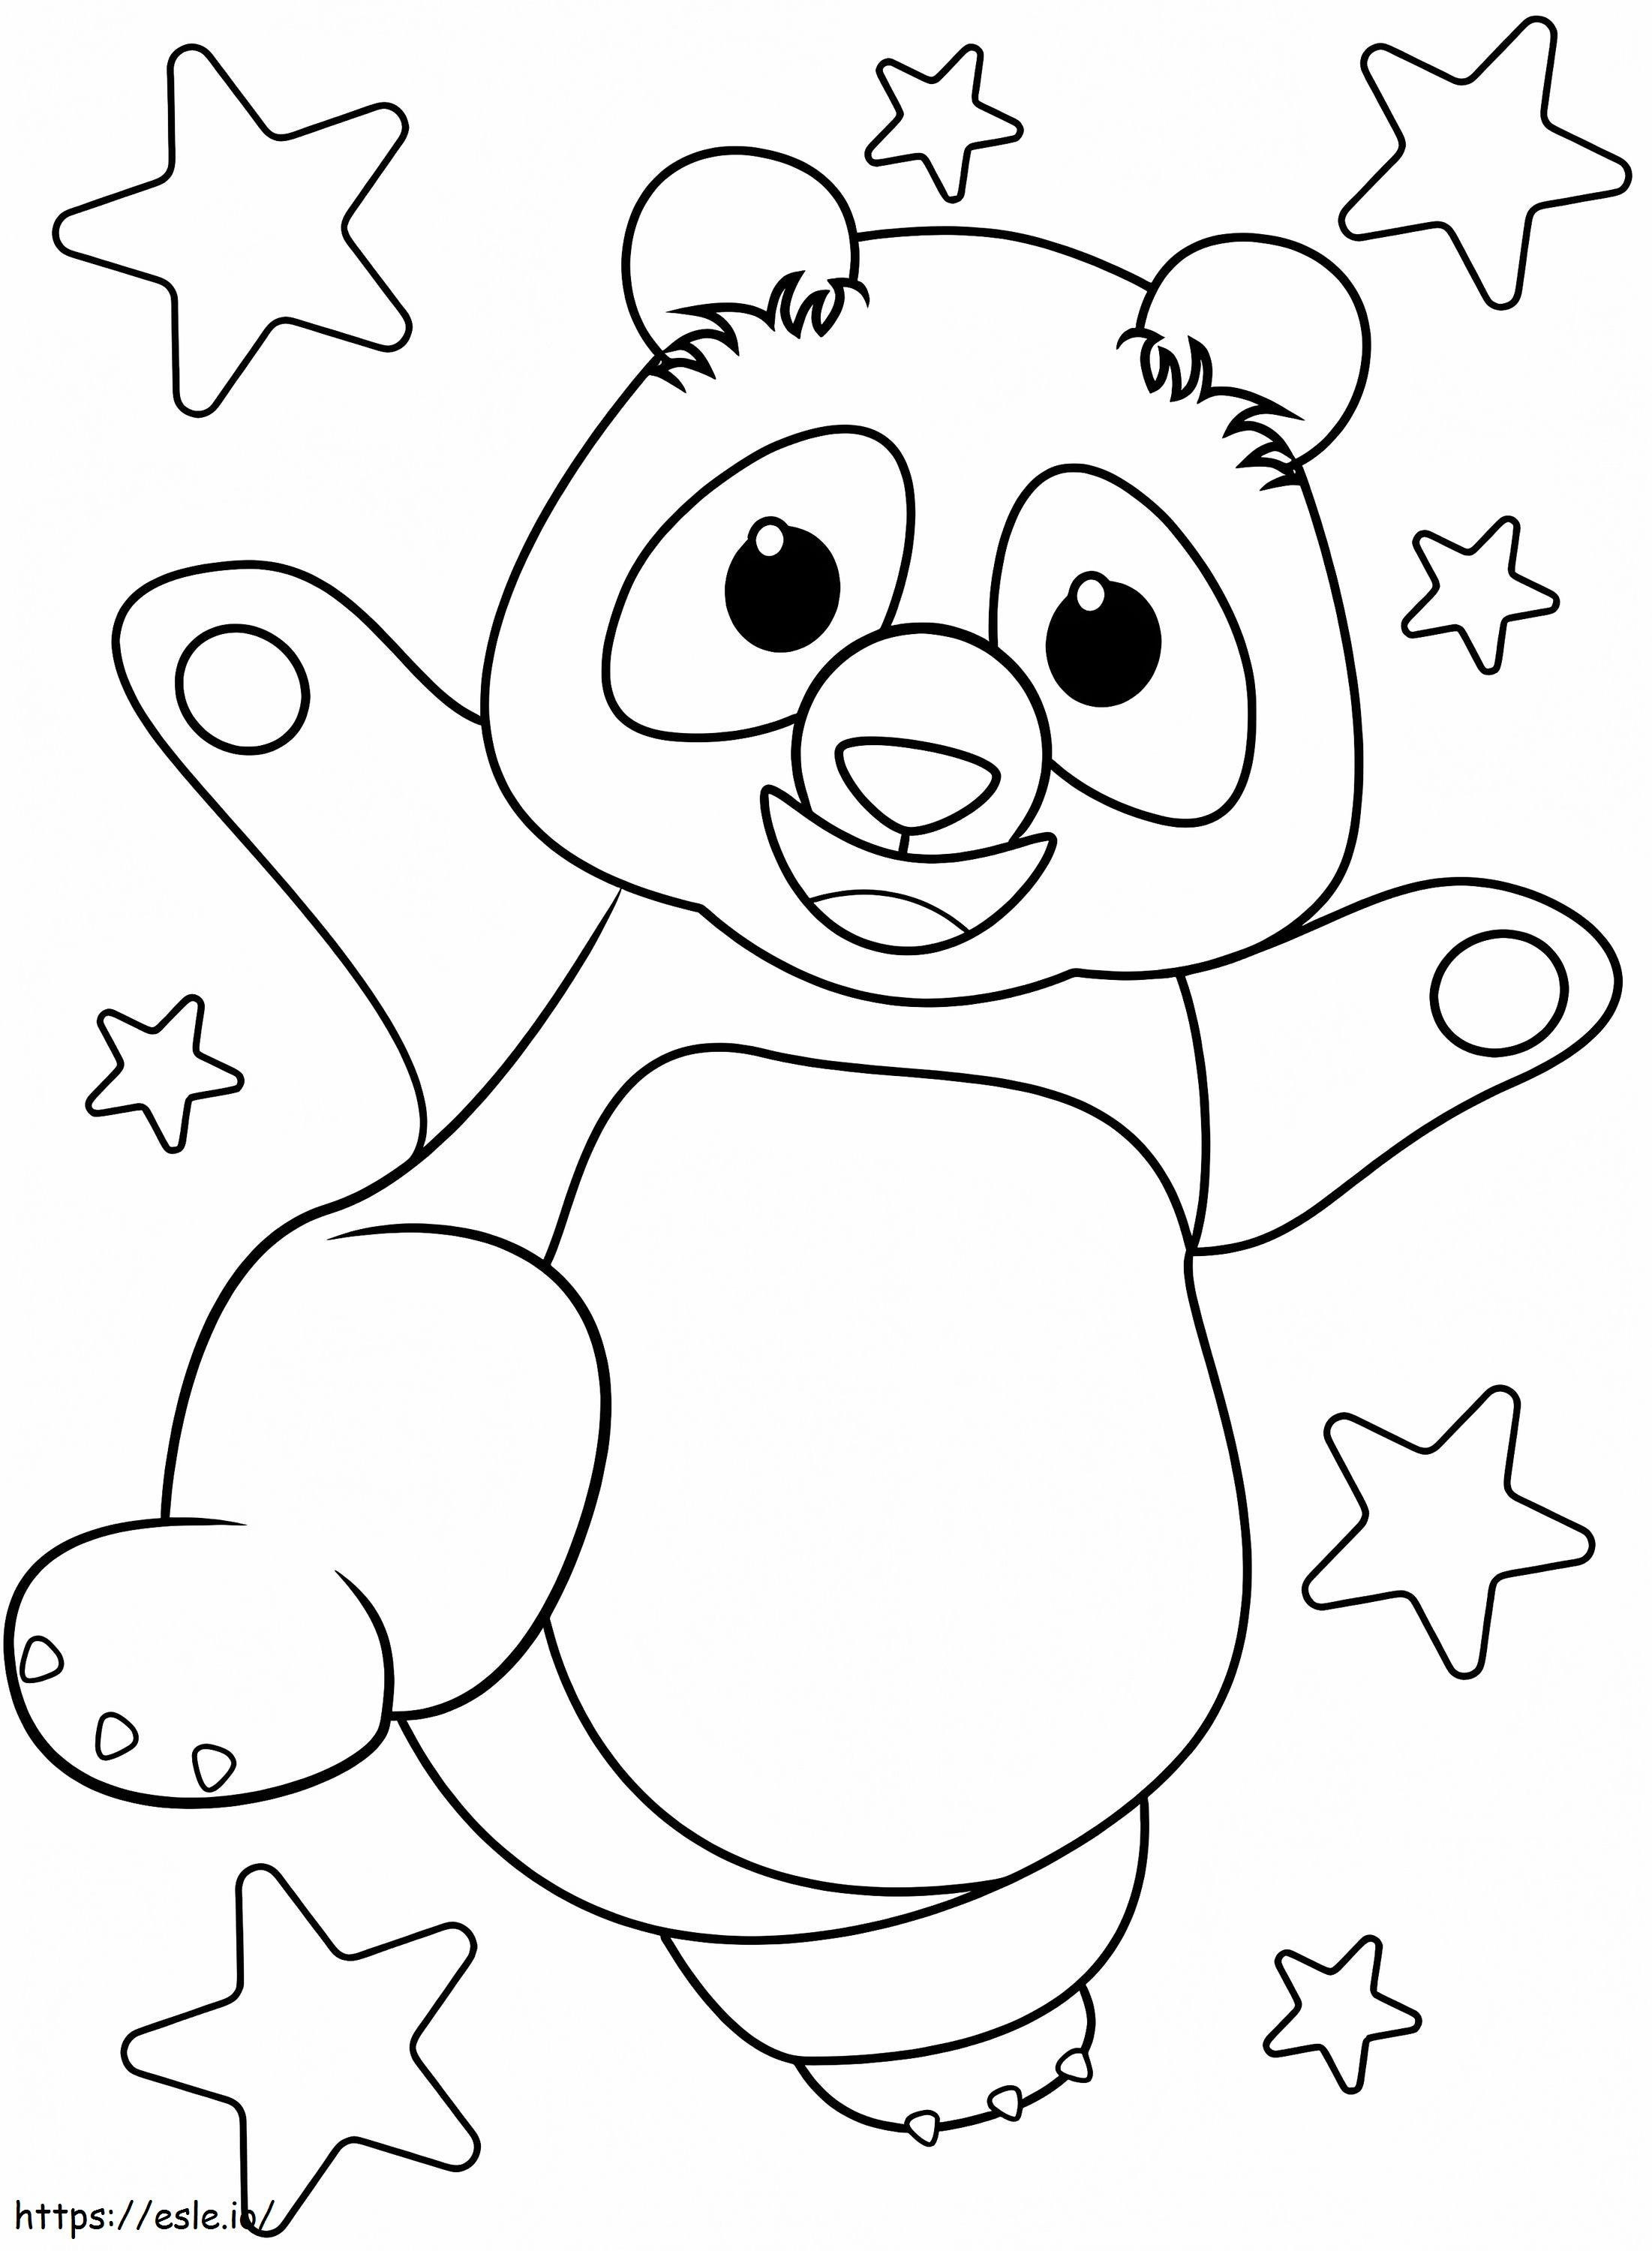 Panda And Stars coloring page